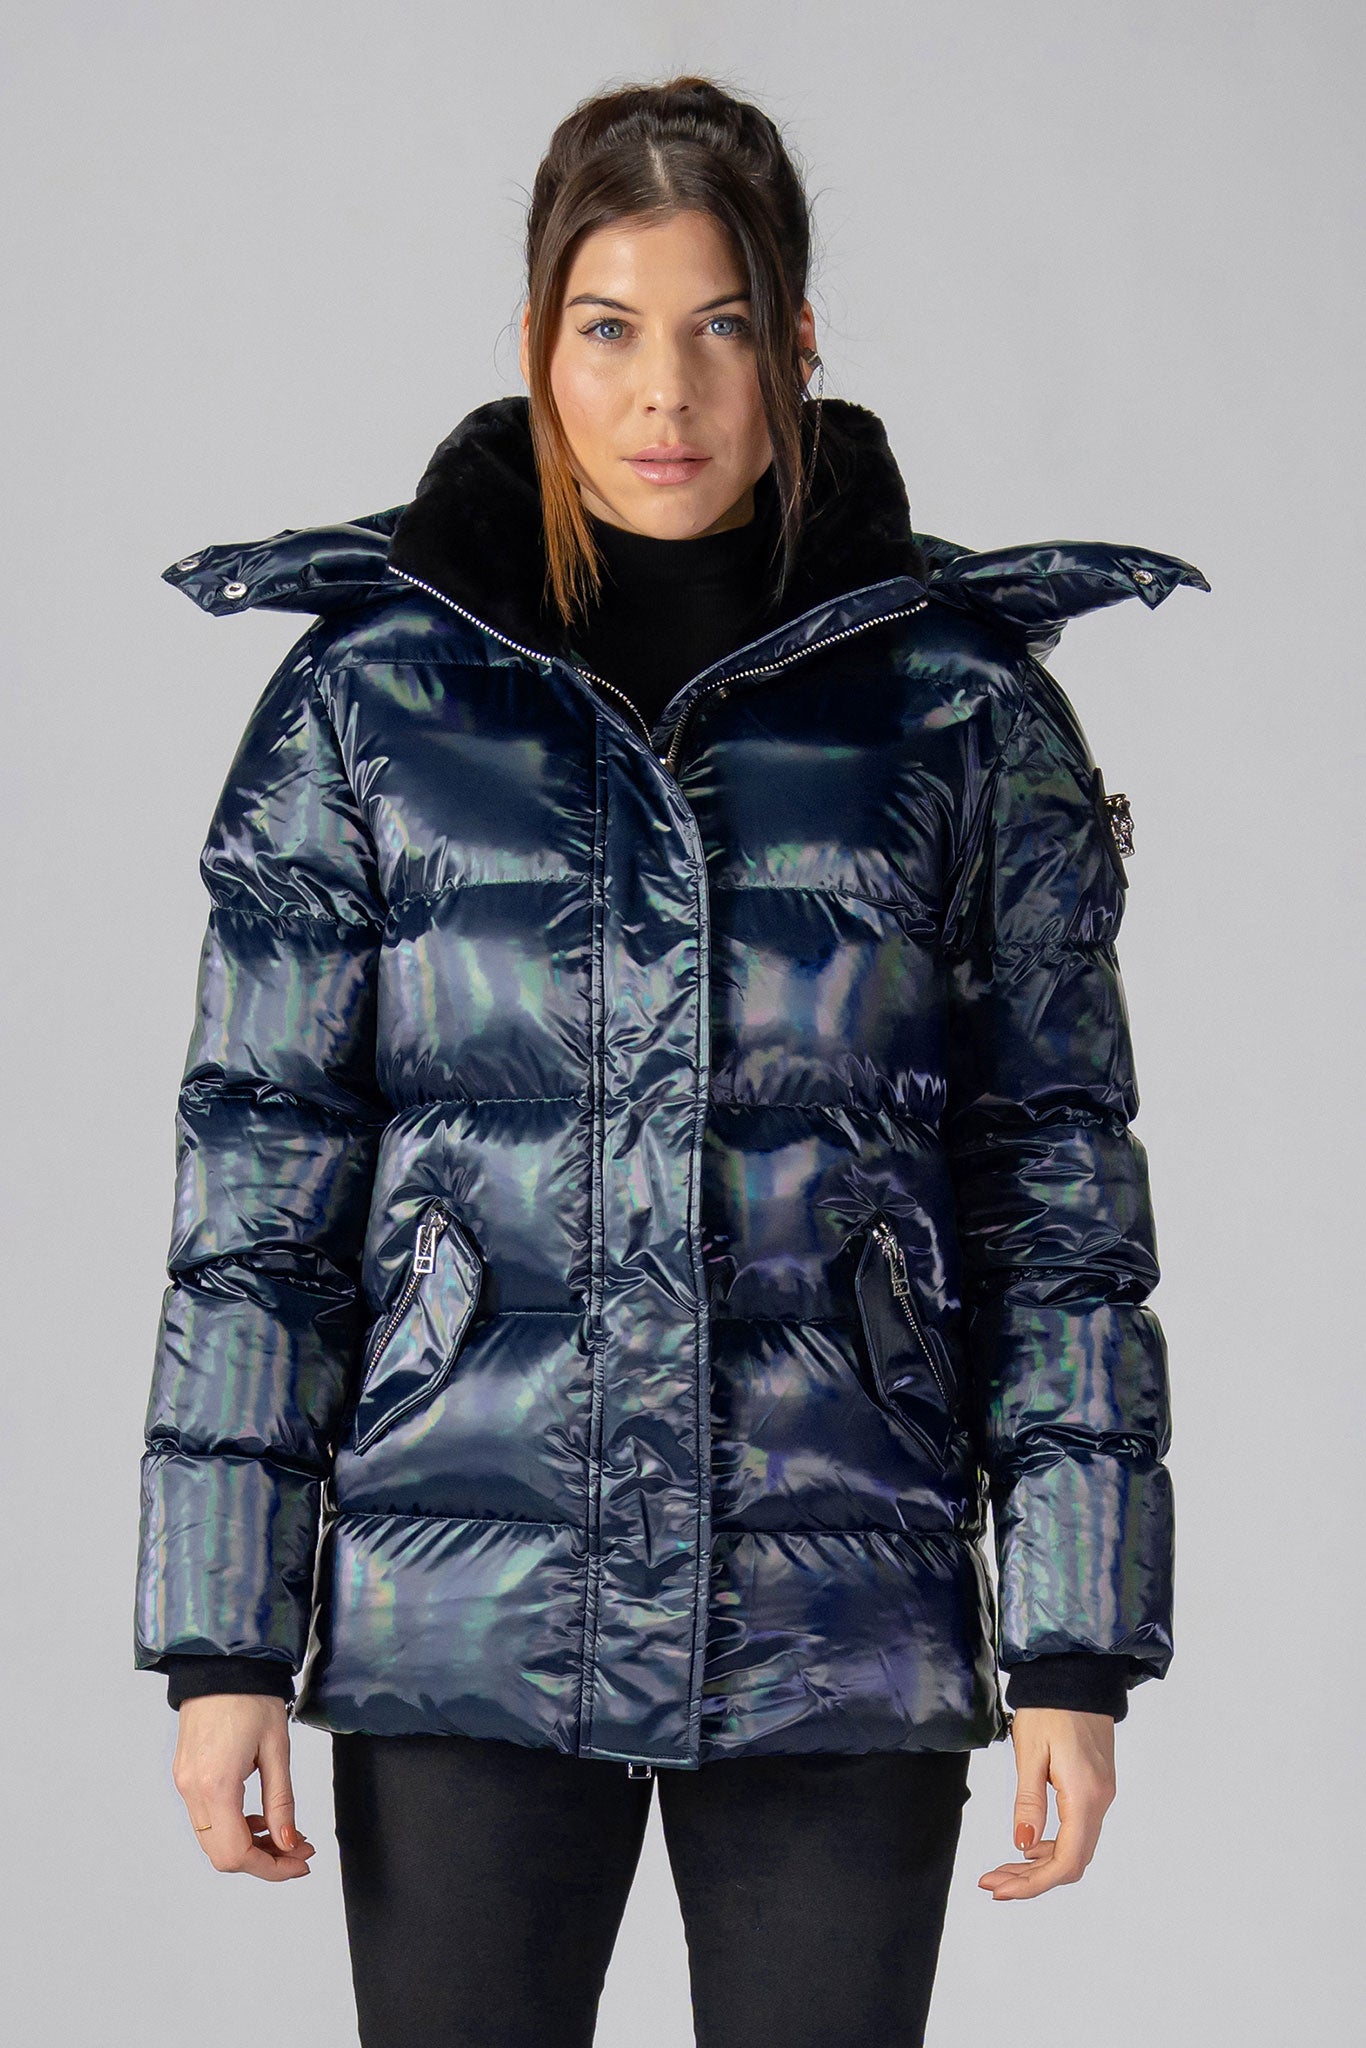 Woodpecker Women's Bumnester Winter coat. High-end Canadian designer winter coat for women in 